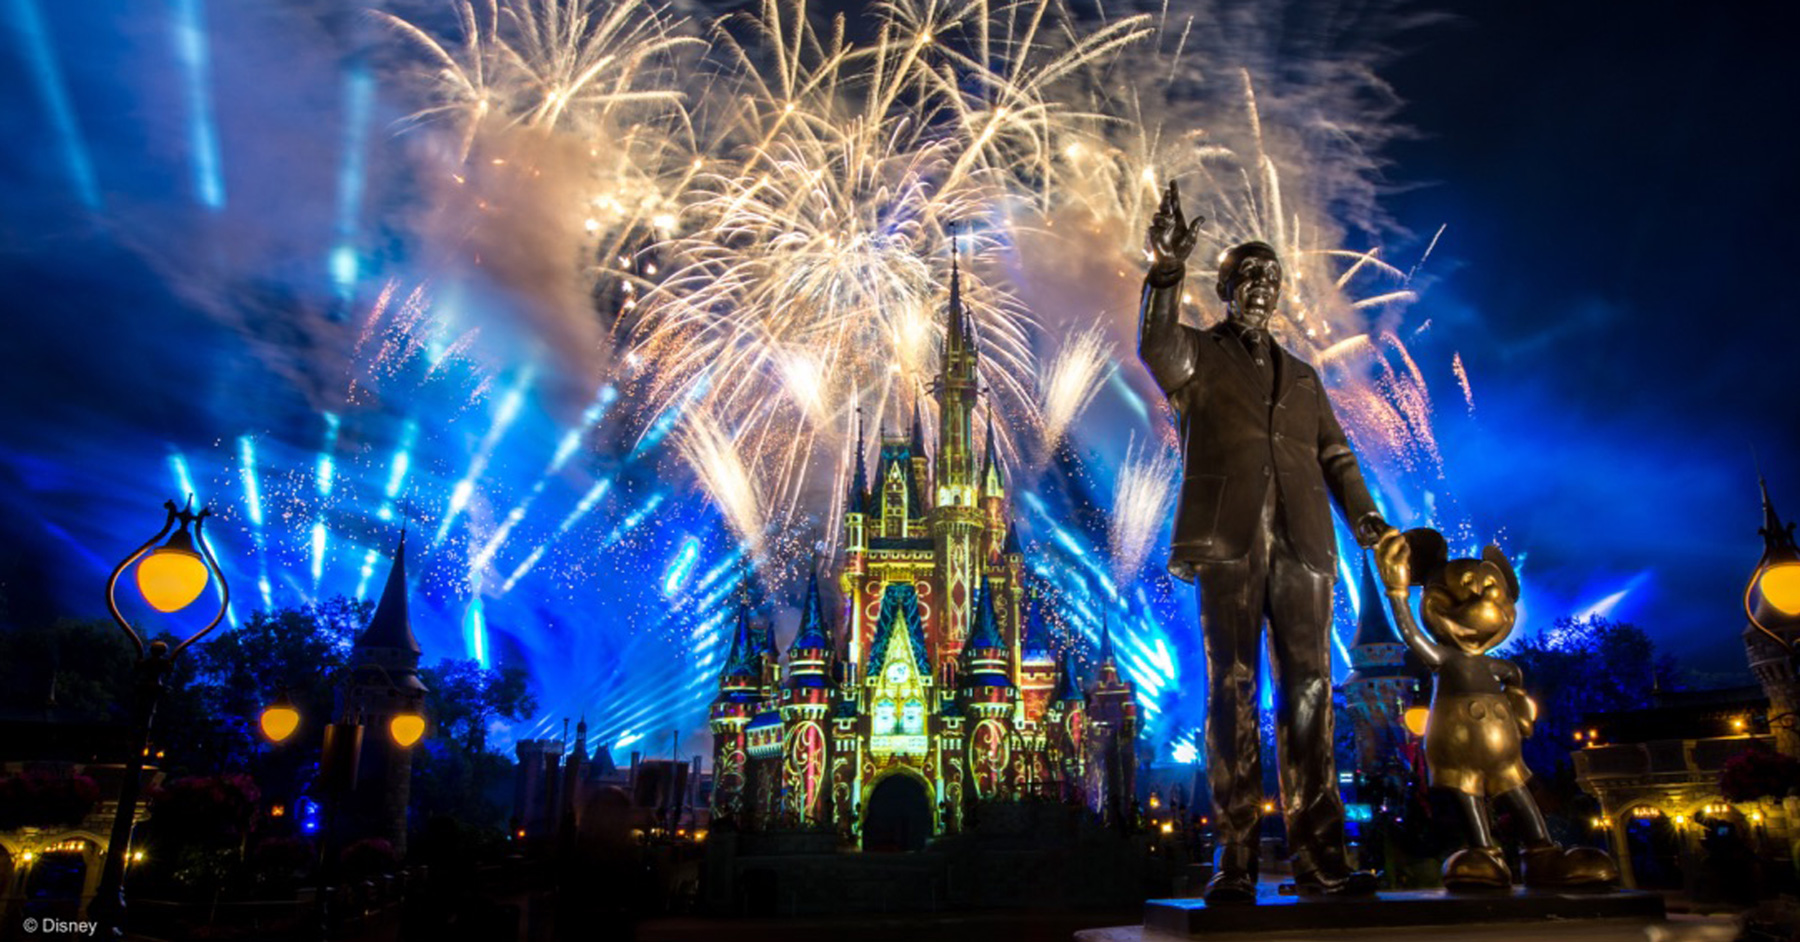 Disney World Magic Kingdom fireworks with Walt Disney and Mickey Mouse statue